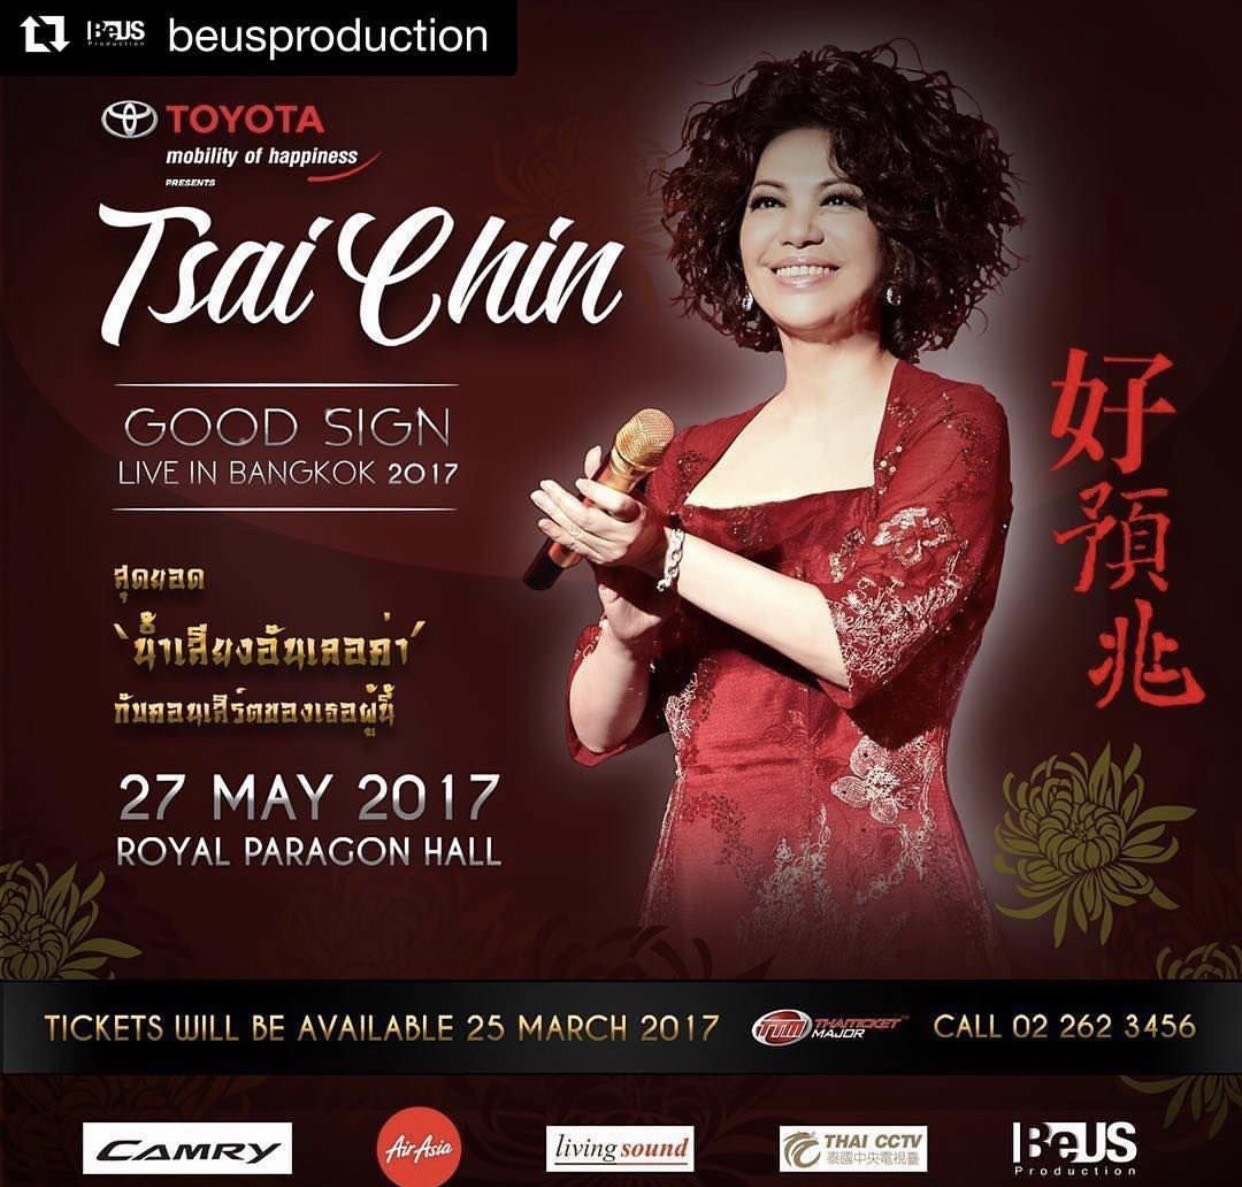 TOYOTA Presents Tsai Chin Good Sign Live in Bangkok 2017